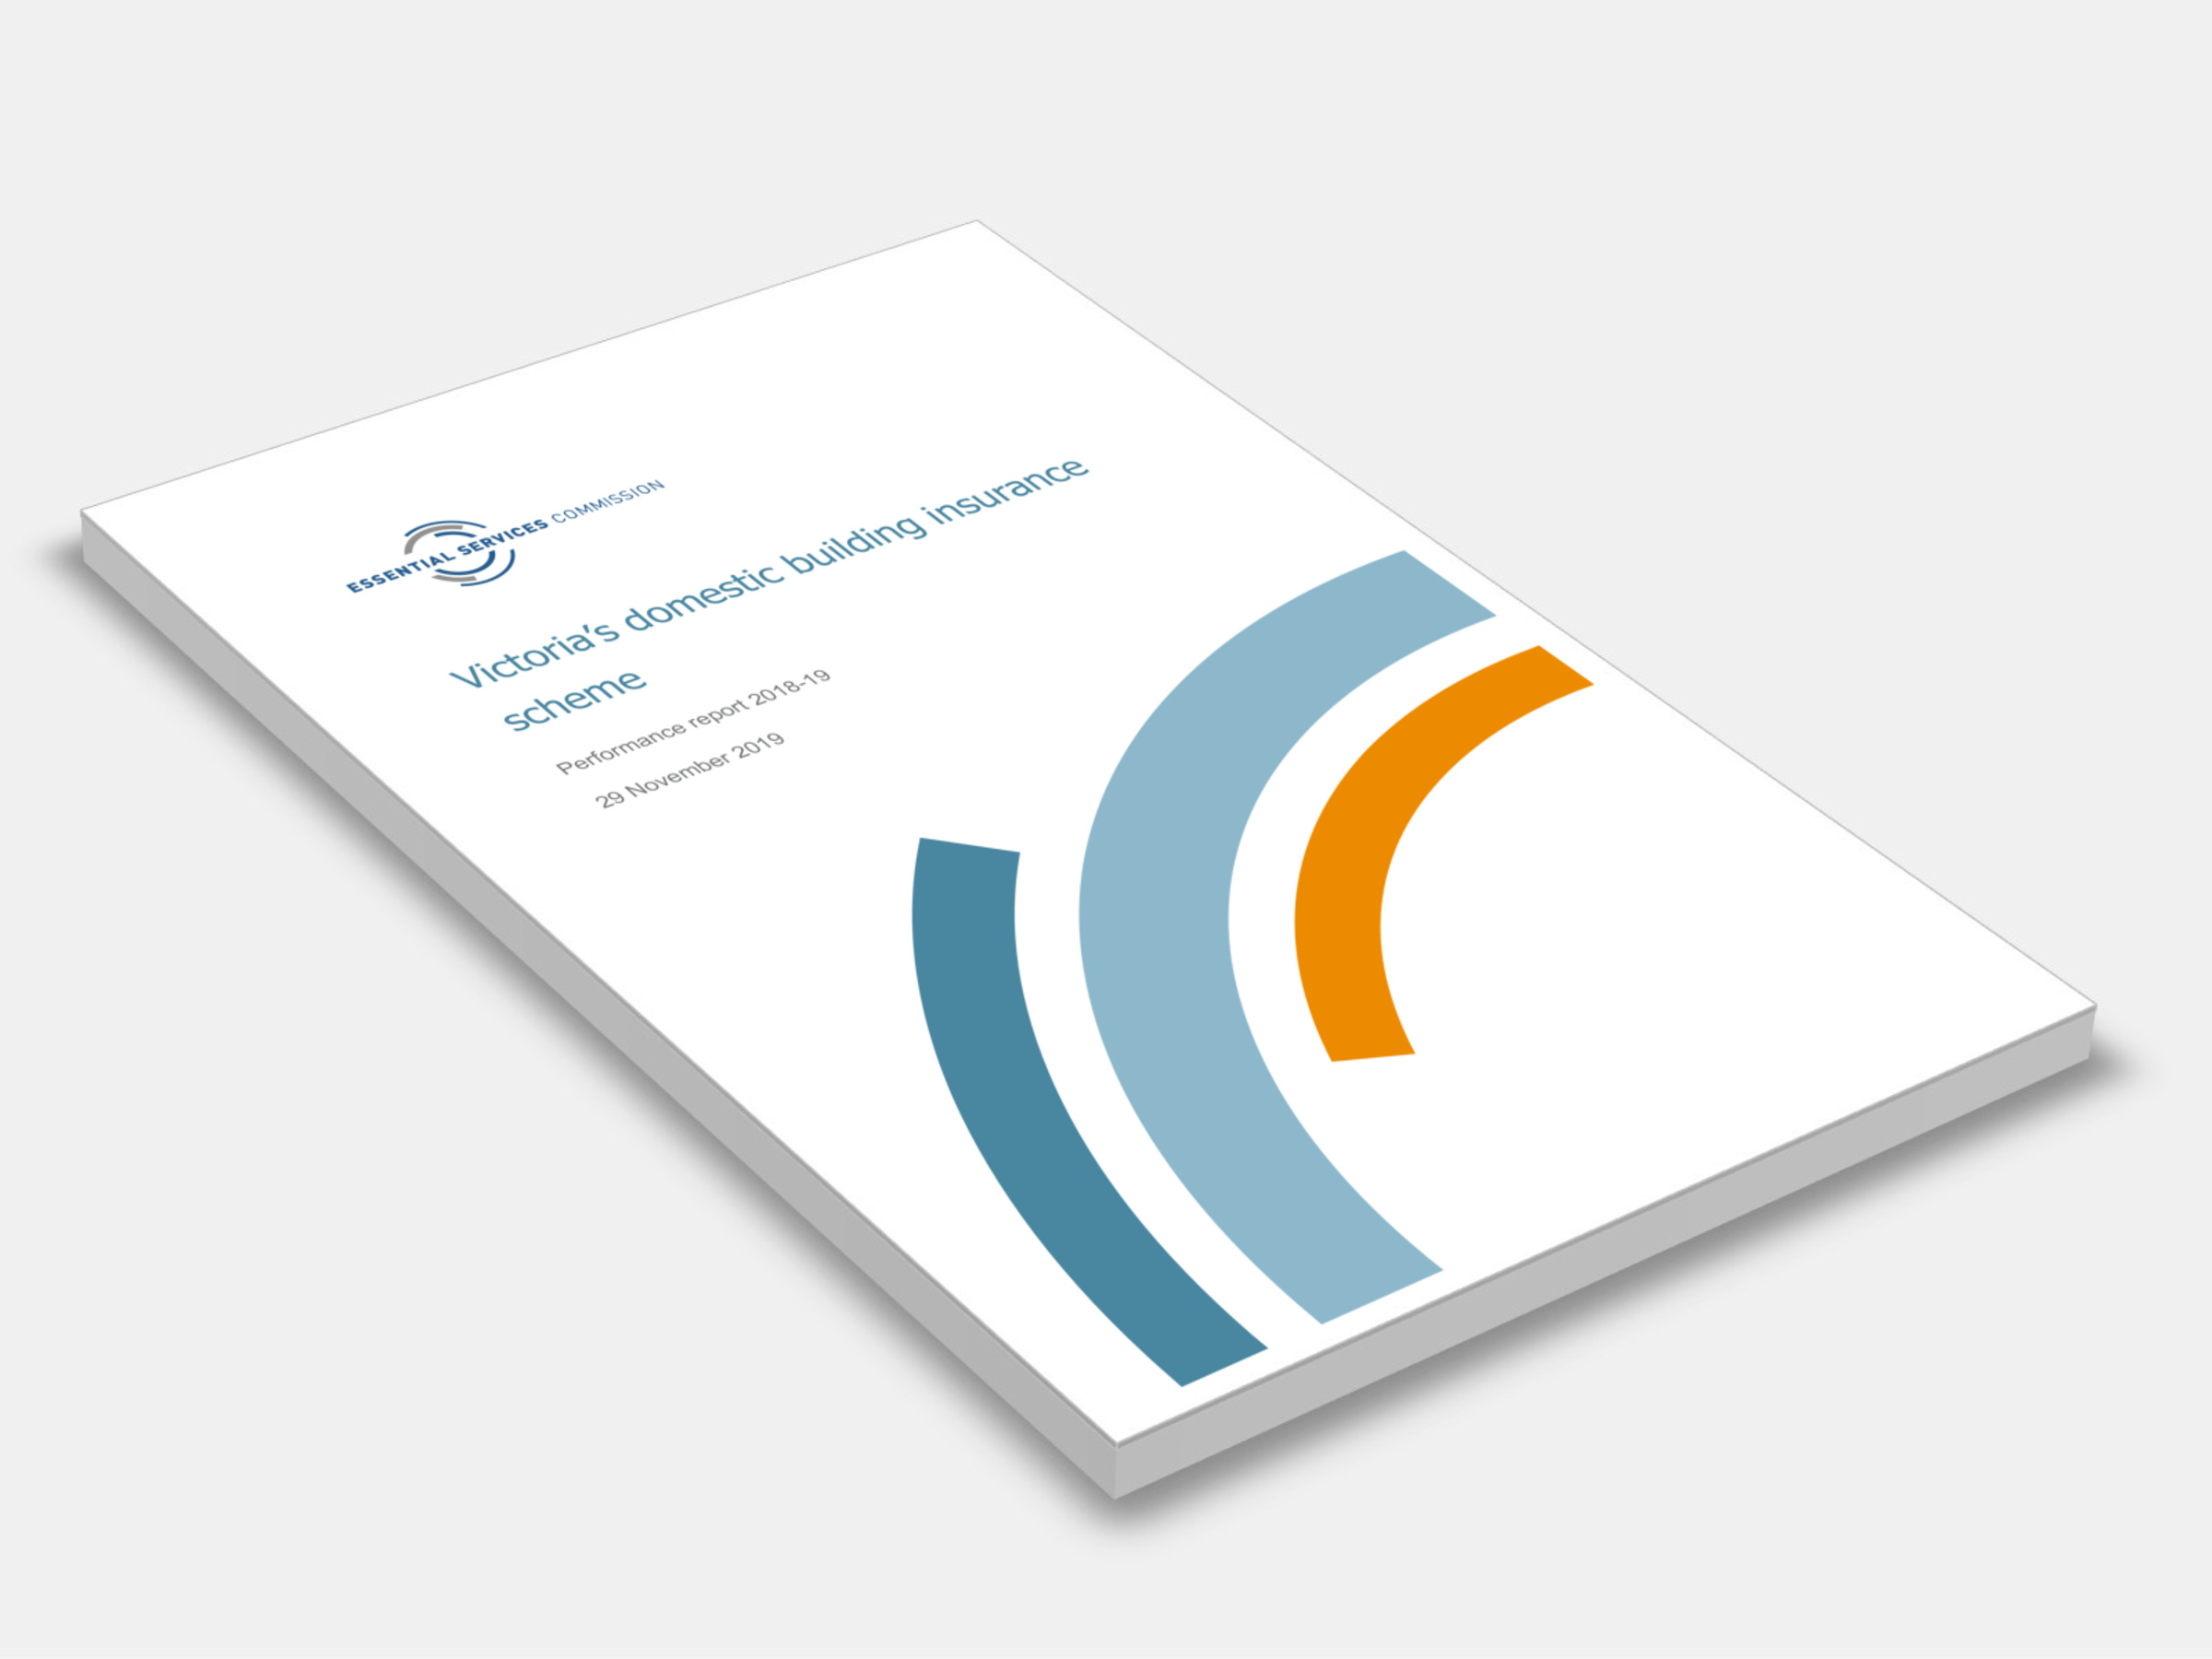 Victoria’s domestic building insurance scheme: Performance report 2018-19 cover 2019